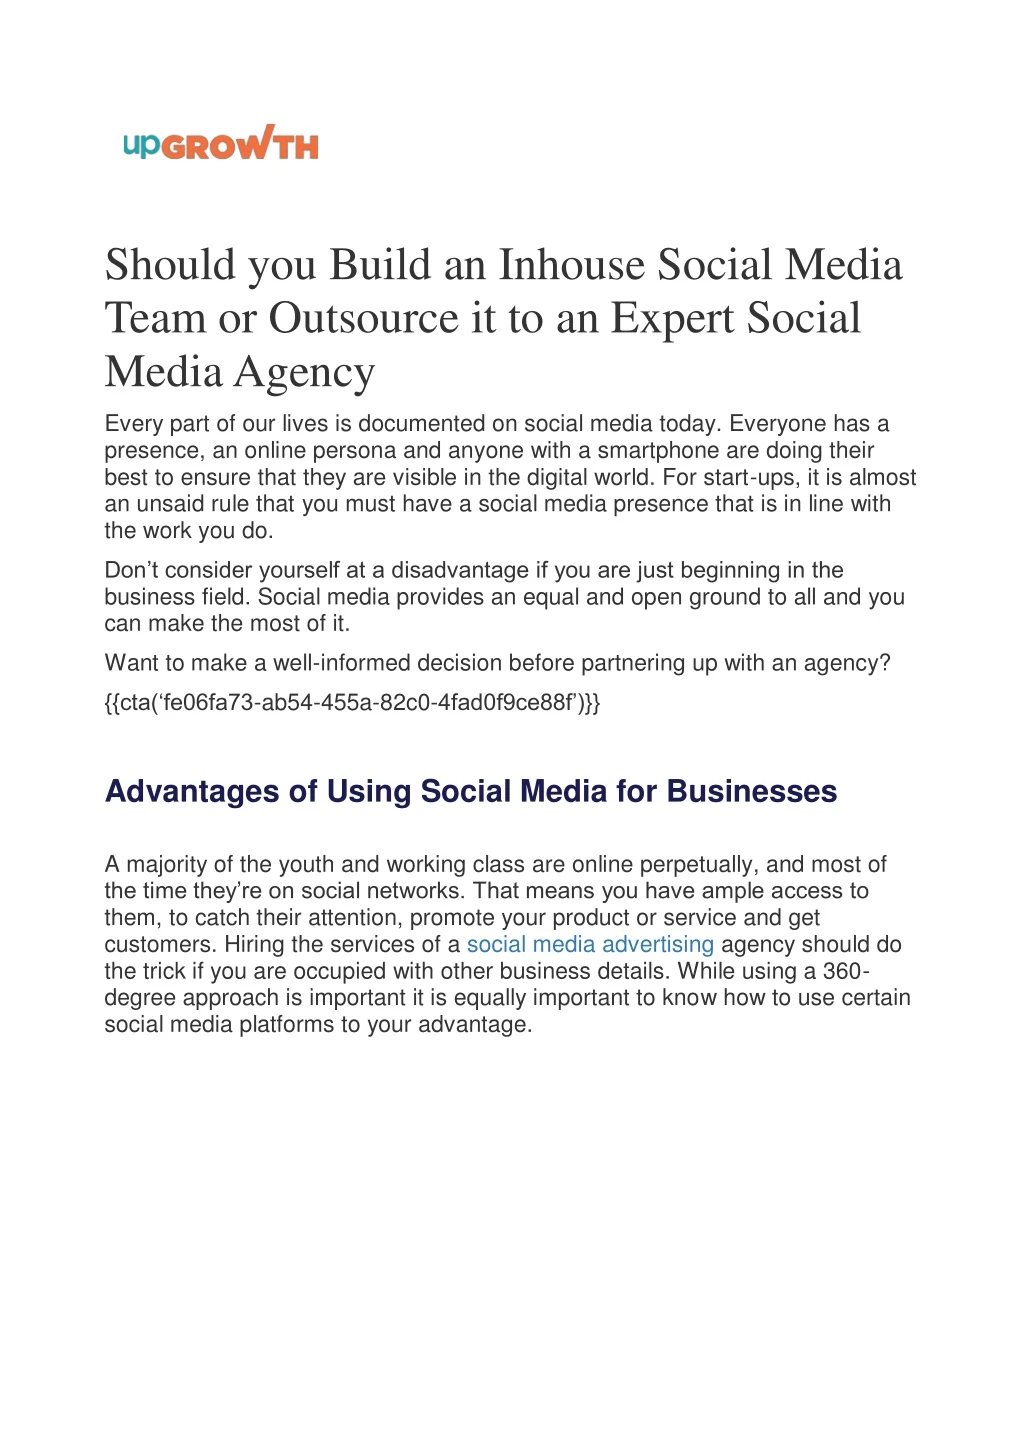 should you build an inhouse social media team